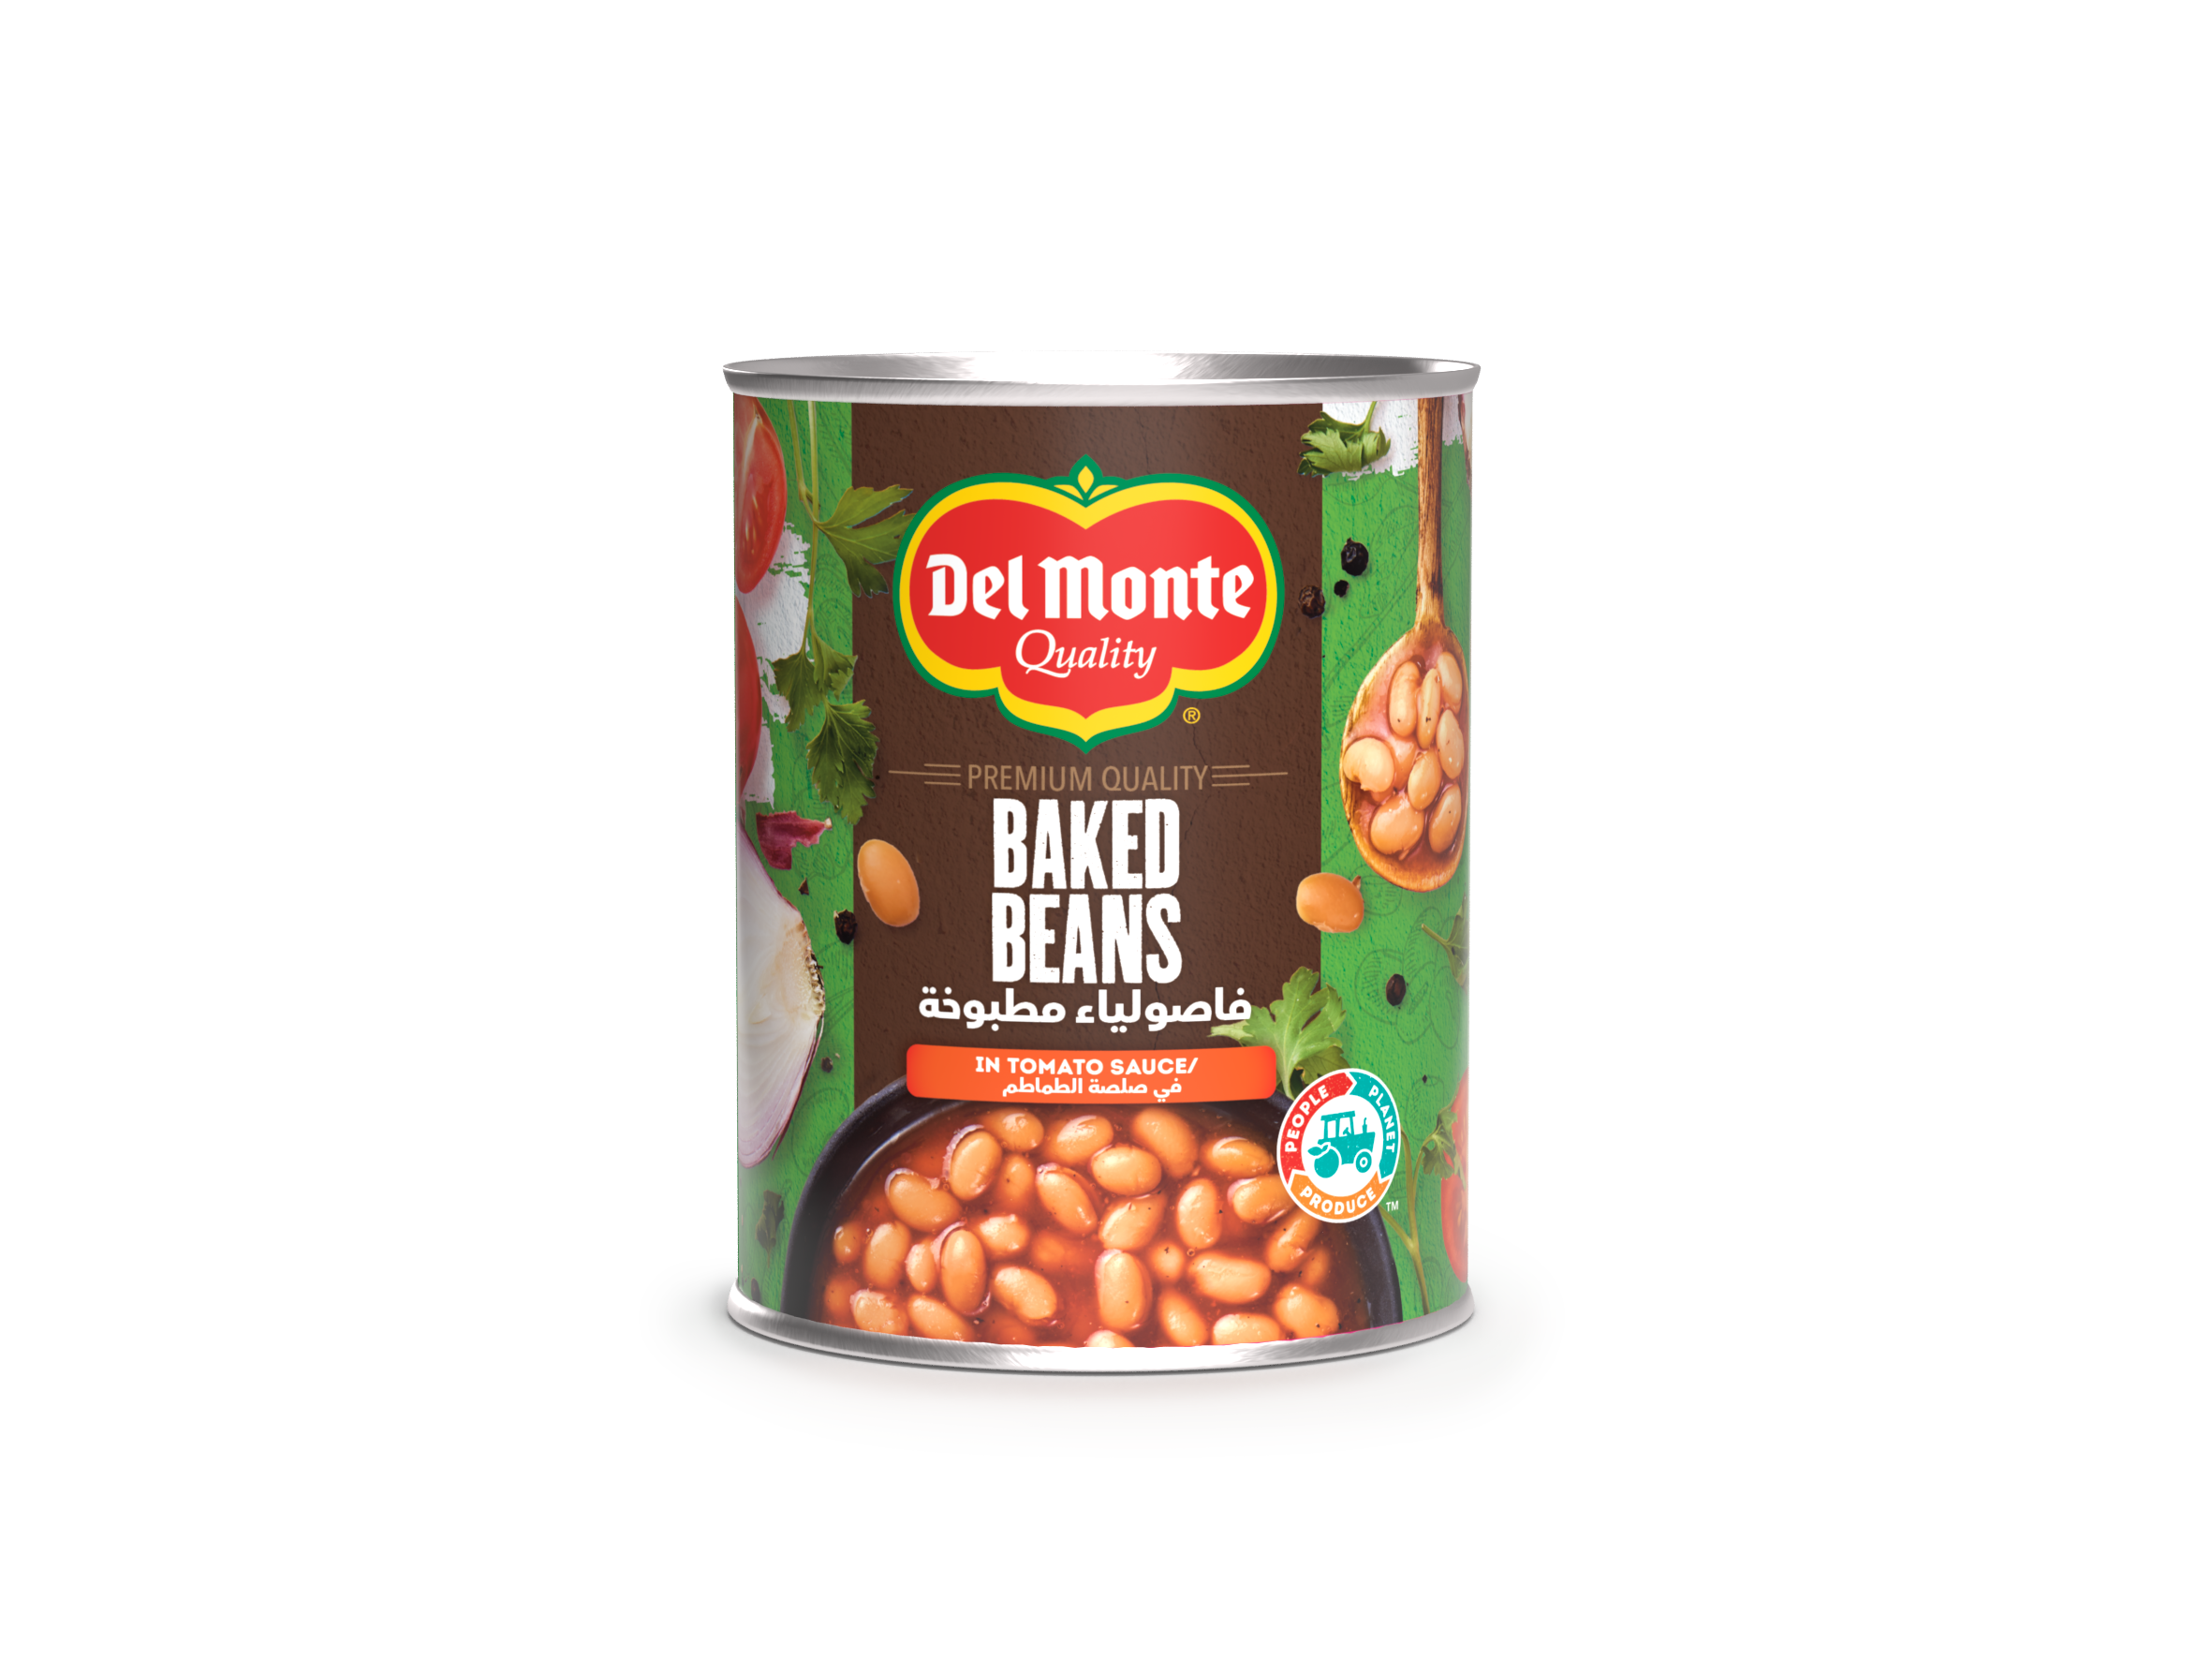 BAkeD BeAnS - Del Monte Arabia